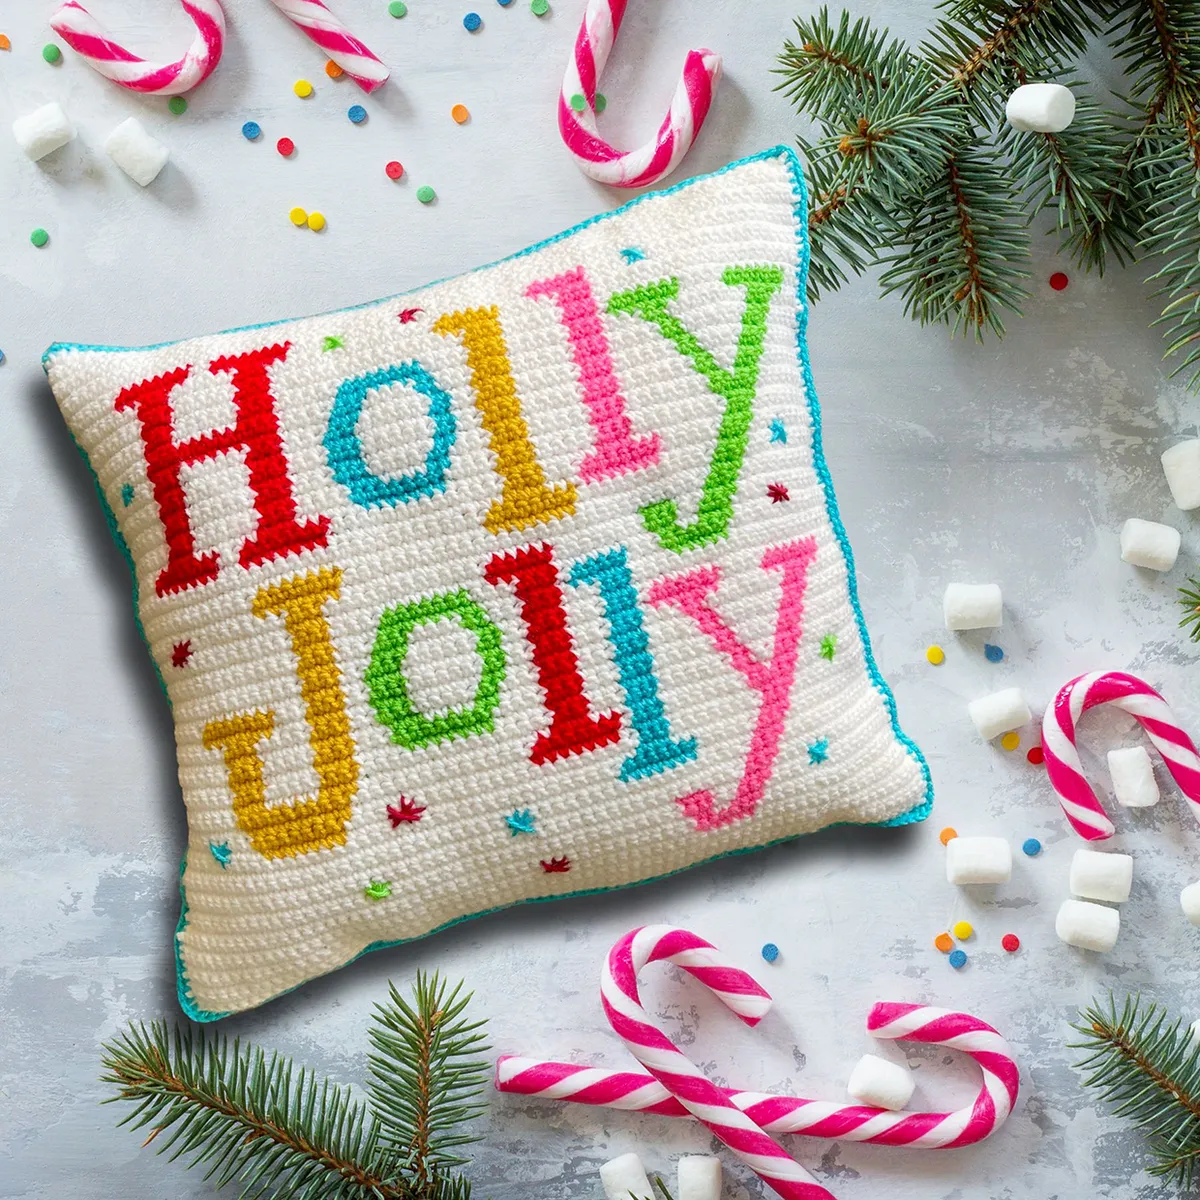 Holly Jolly cushion crochet pattern